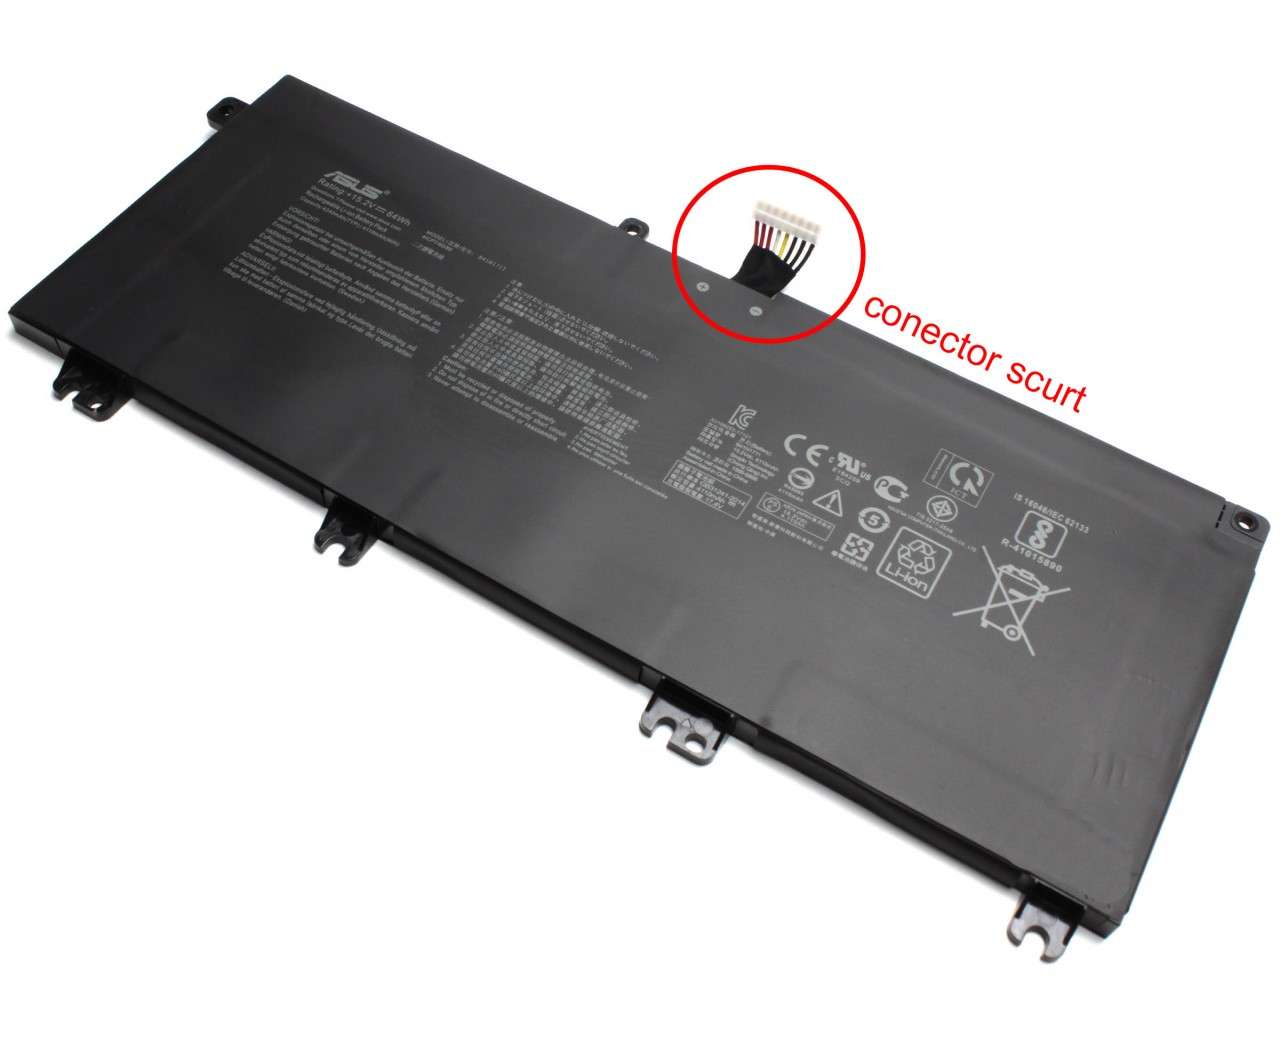 Baterie Asus GL703VD Originala 64Wh conector scurt